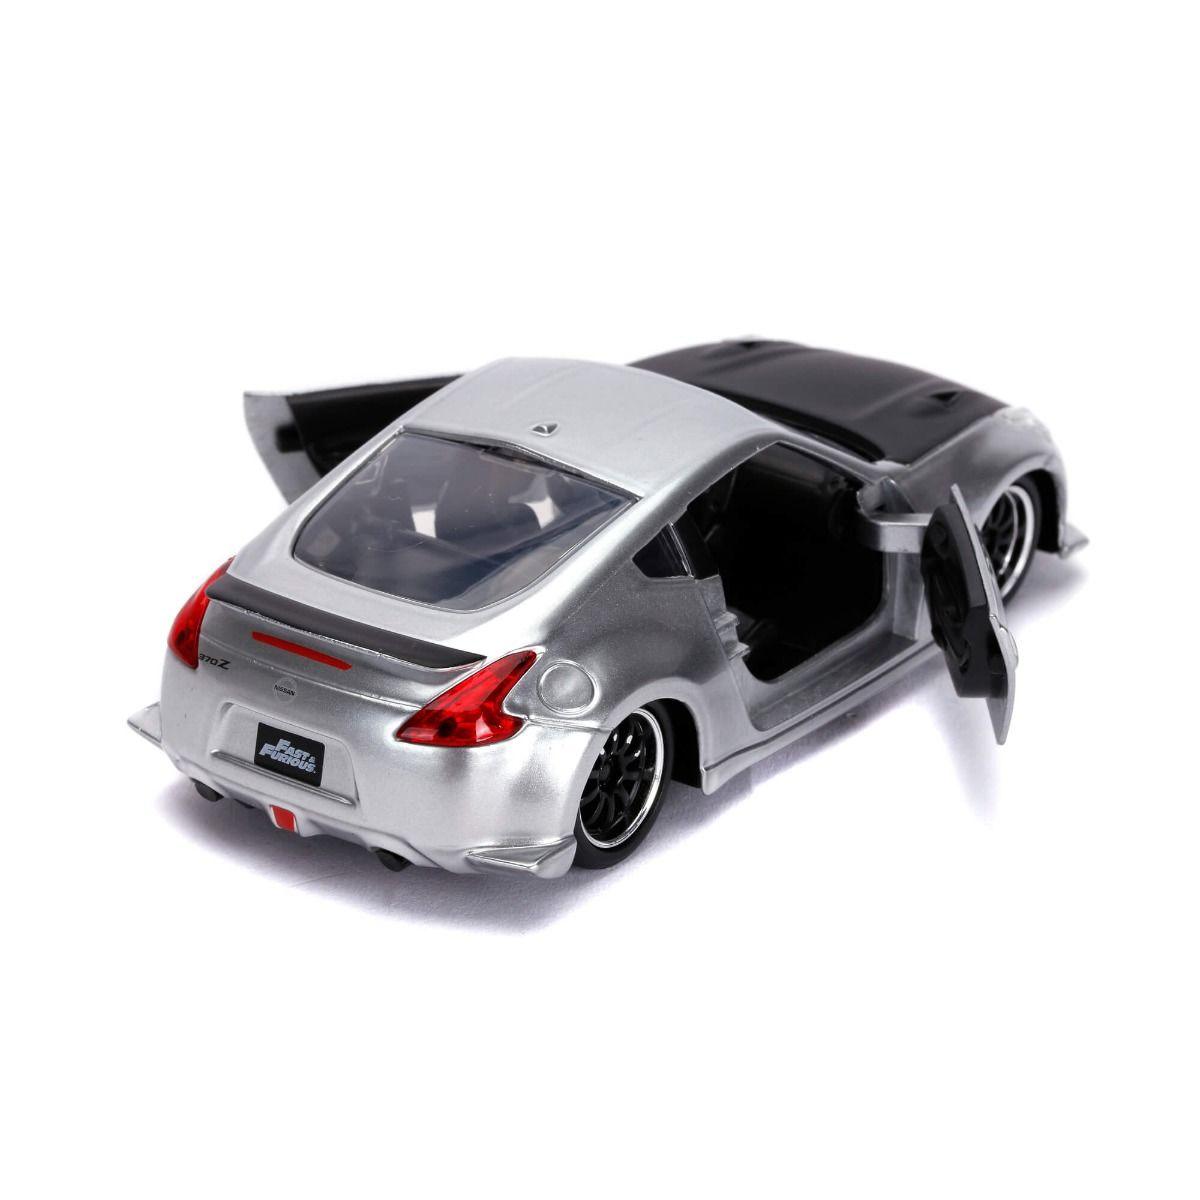 JAD31852 Fast and Furious - 2009 Nissan 370Z 1:32 Hollywood Ride - Jada Toys - Titan Pop Culture